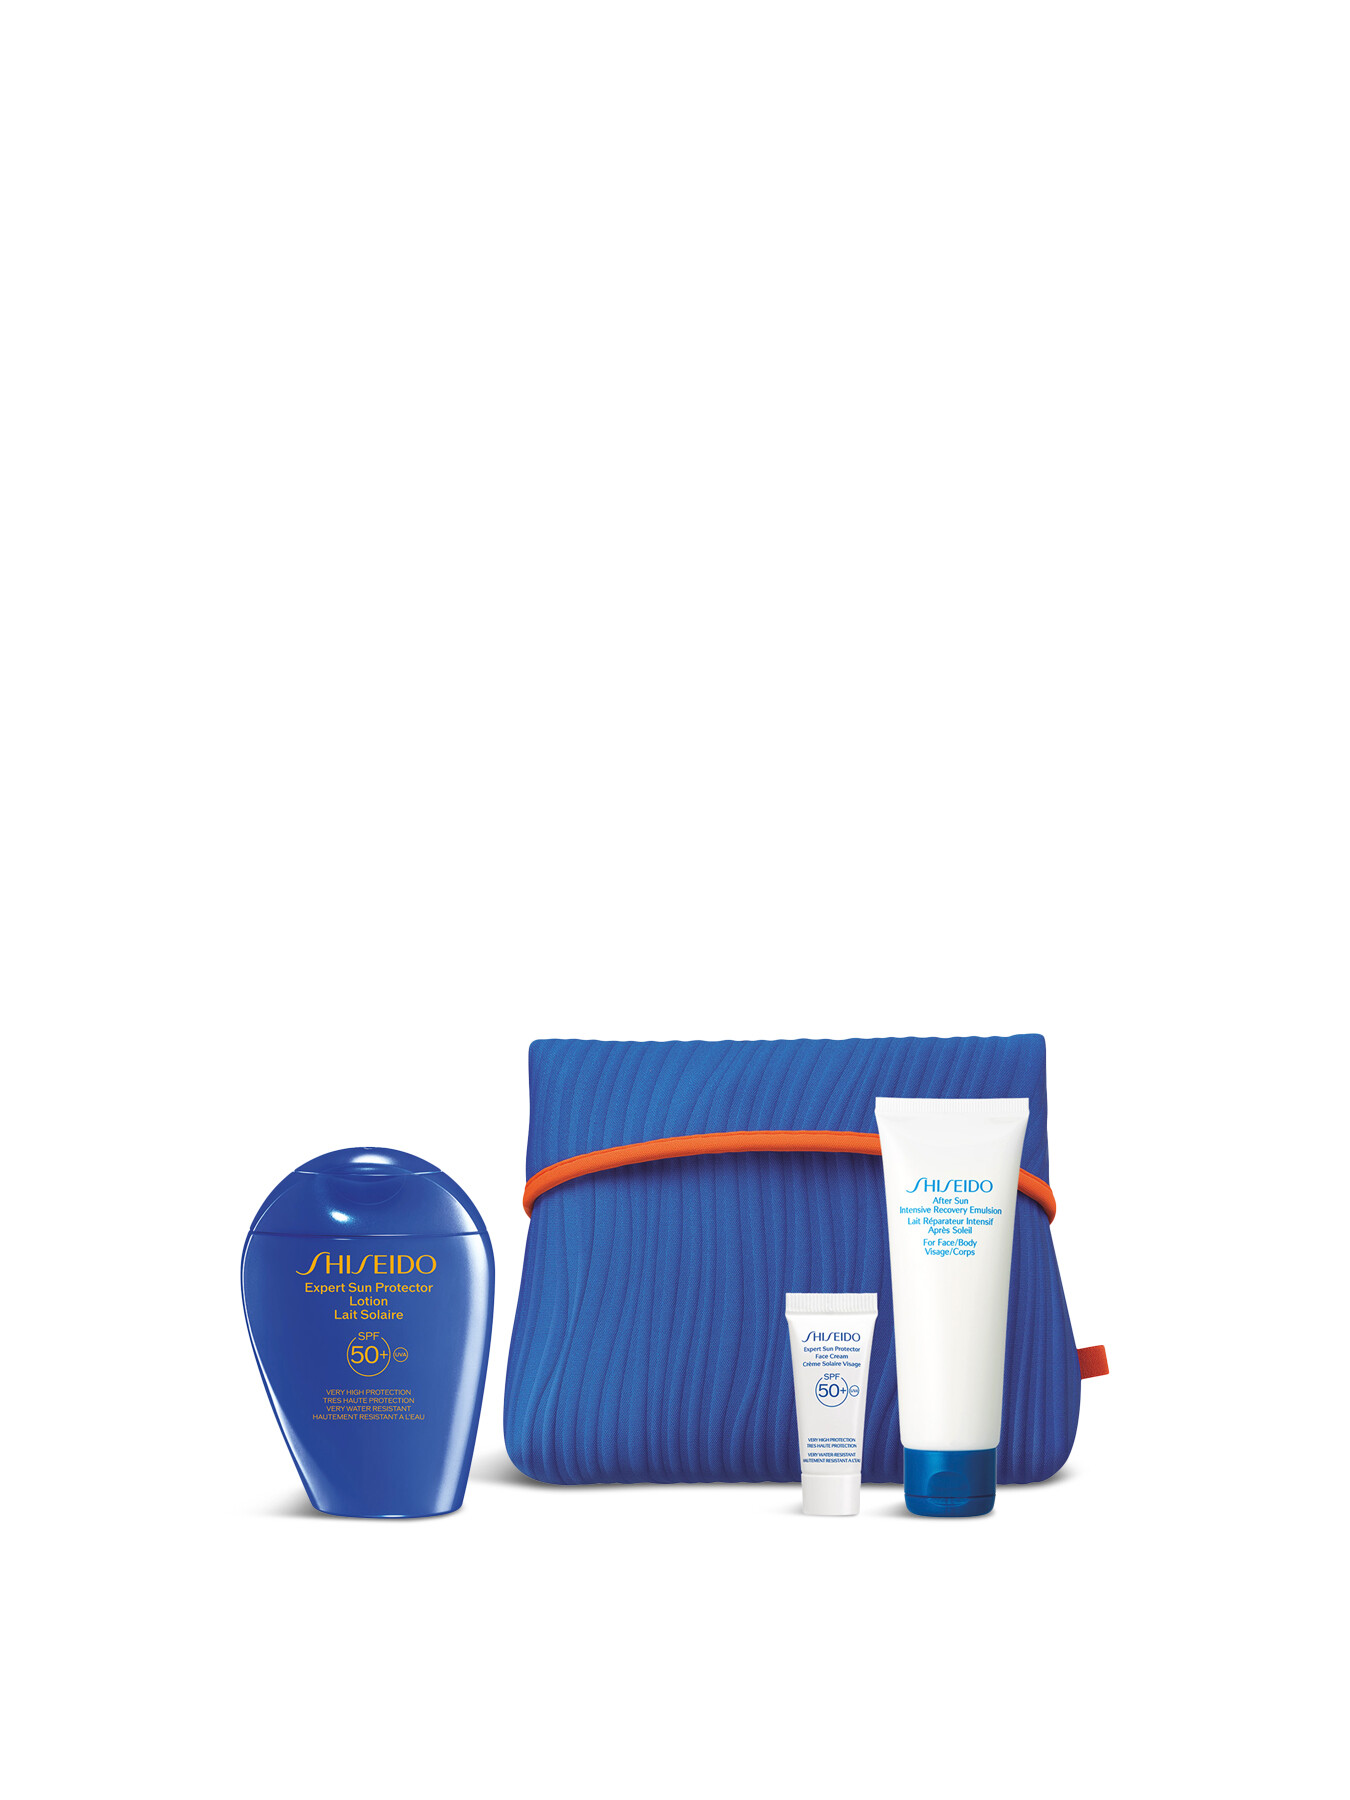 Shiseido Expert Sun Aging Protection Spf50 Set In Blue